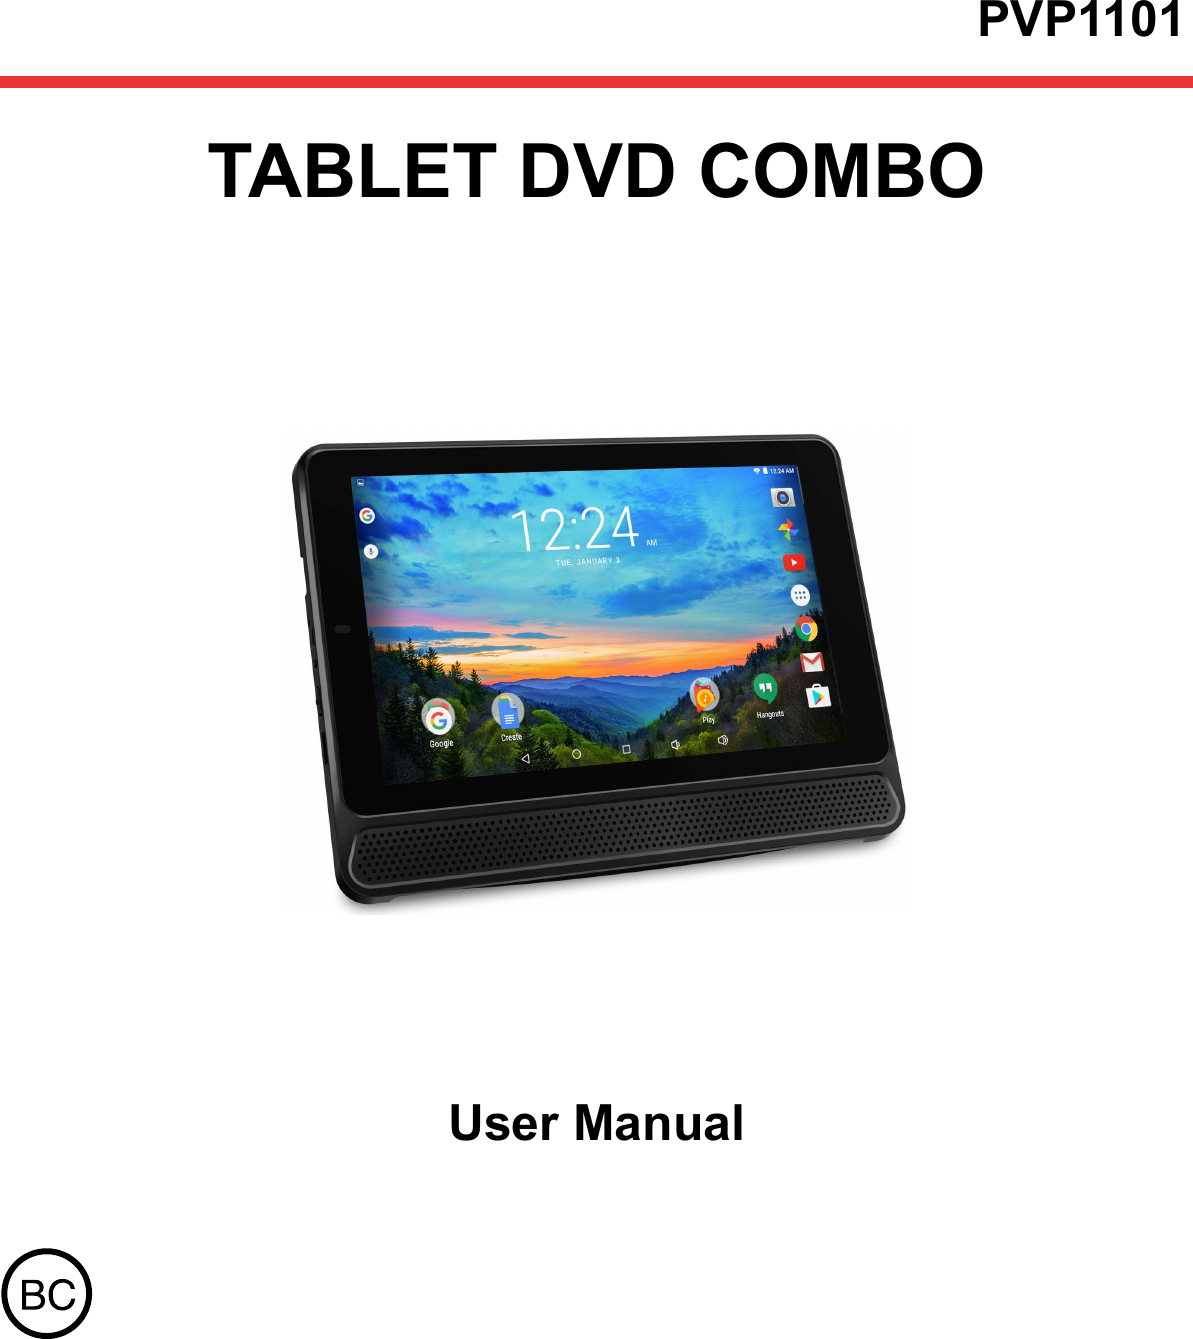 TABLET DVD COMBOUser Manual PVP1101